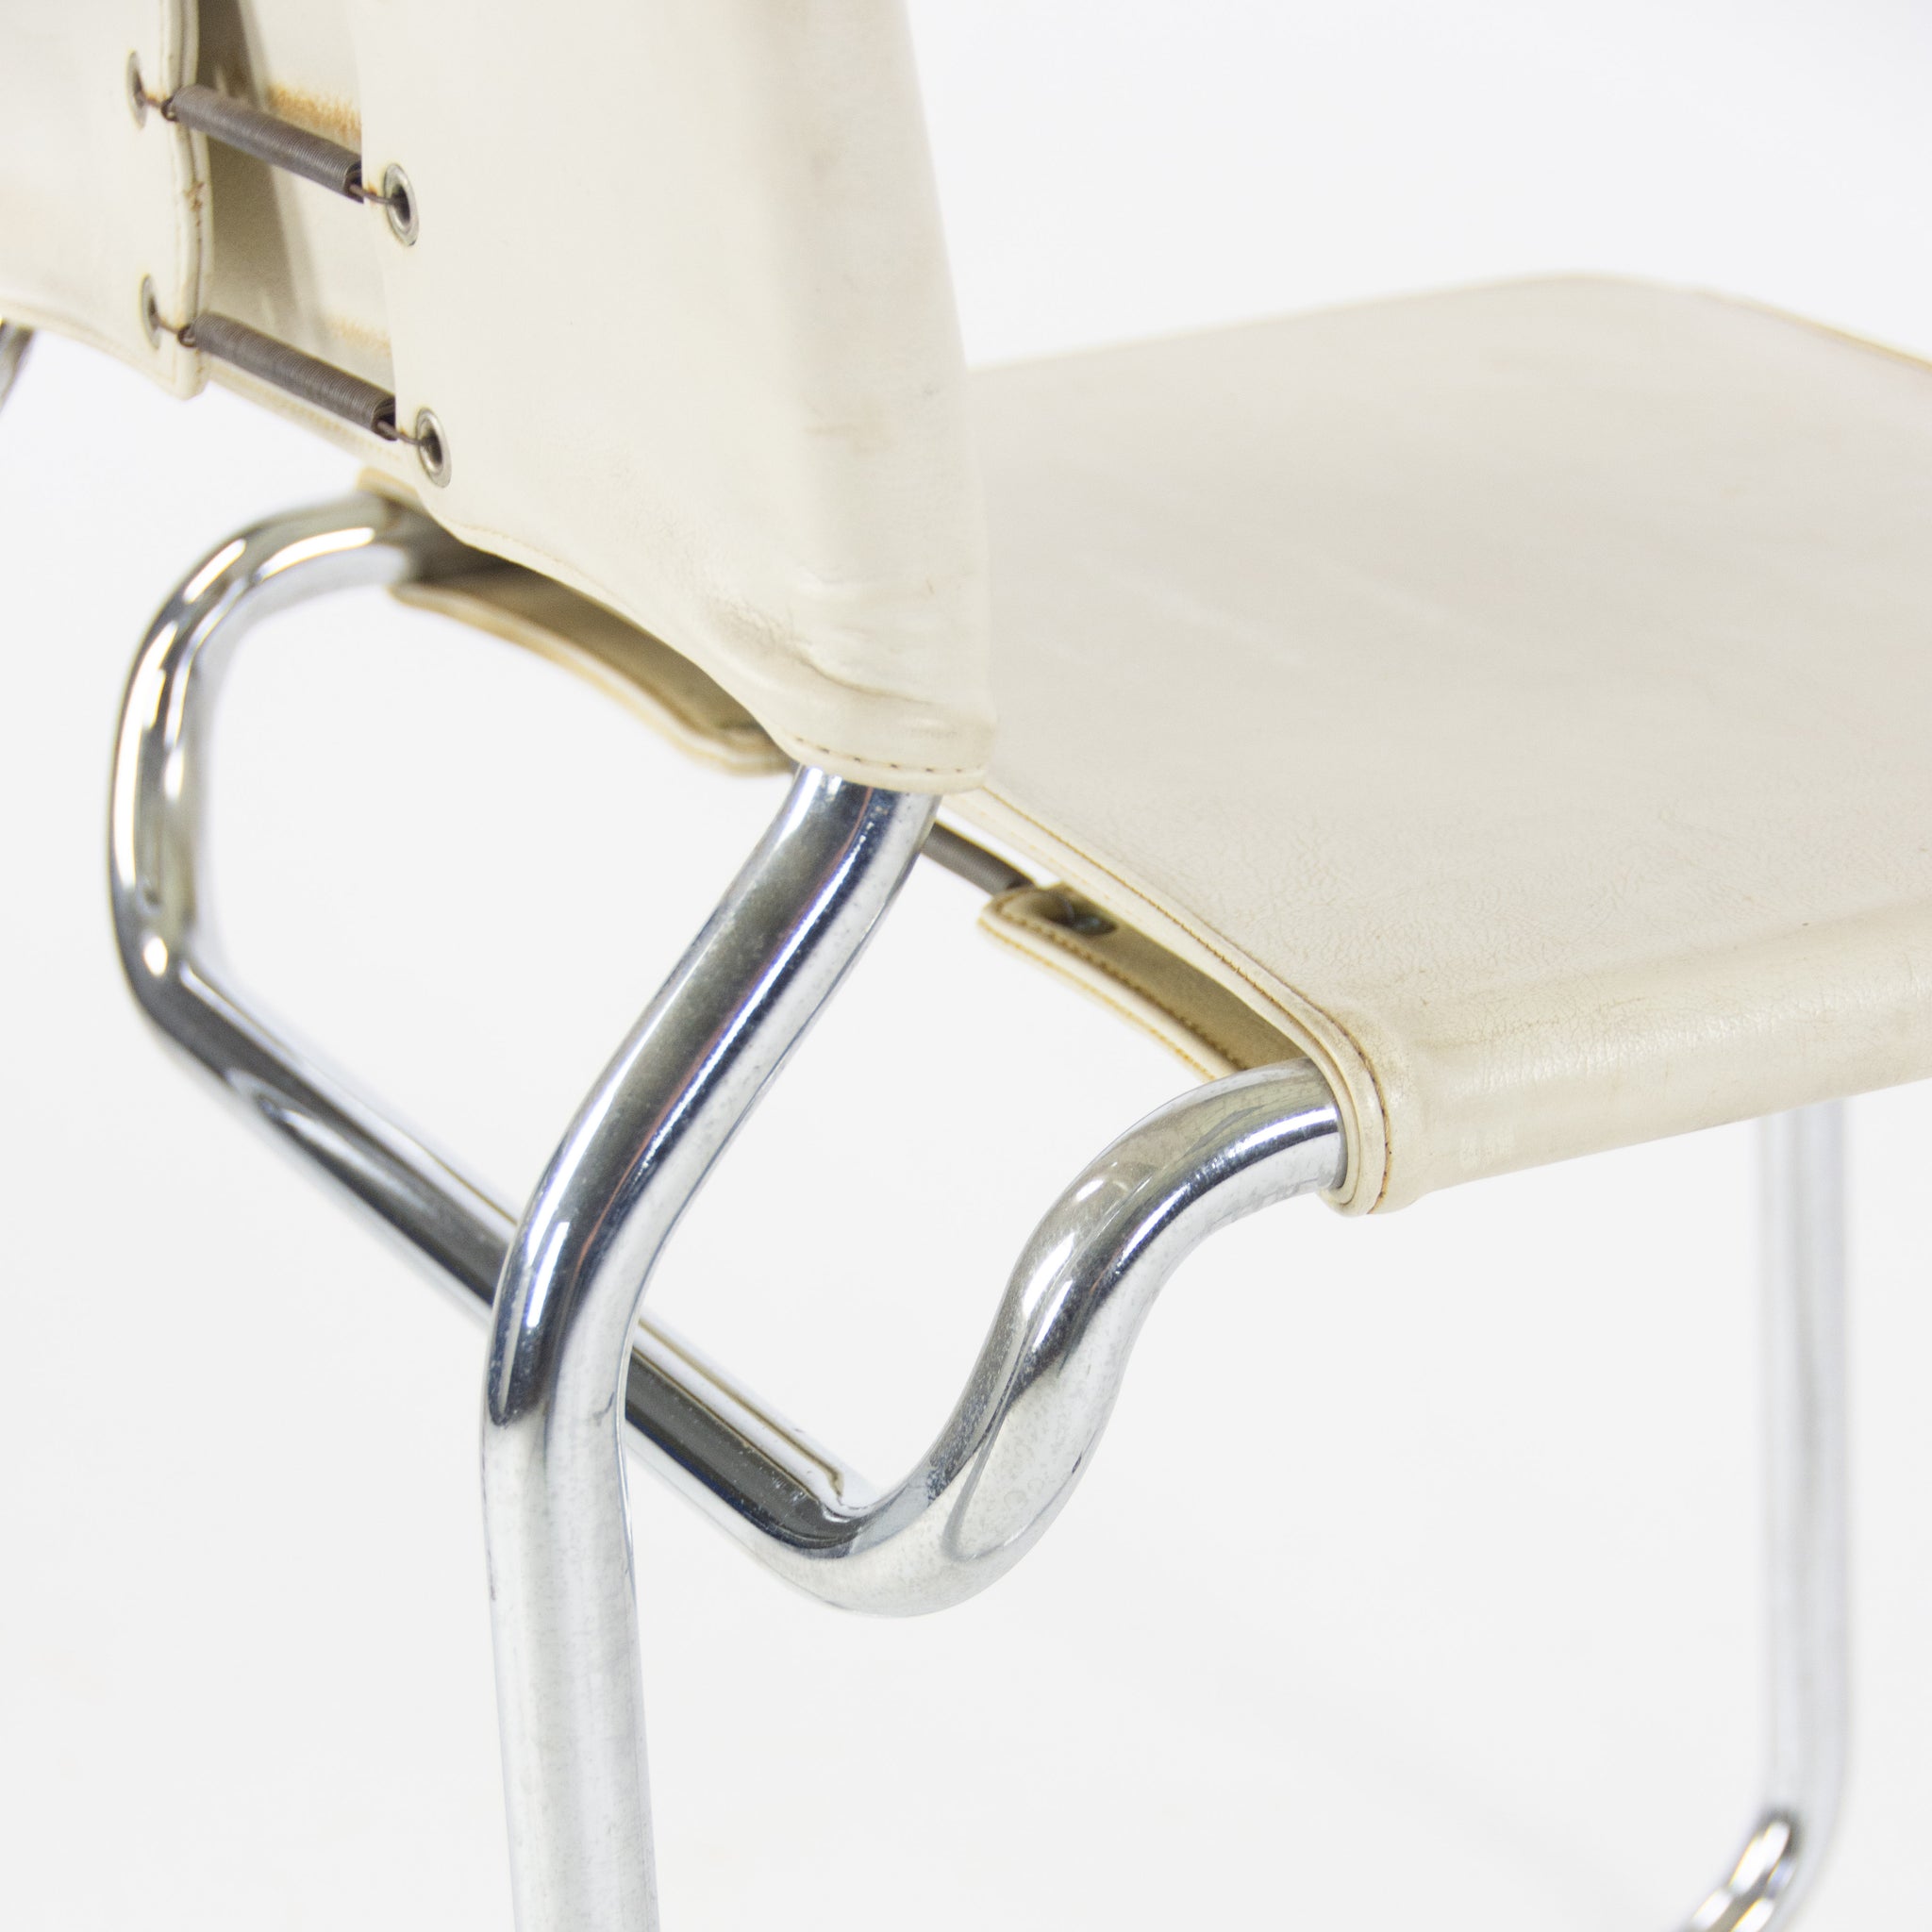 SOLD 1970s Nicos Zographos Designs No 66 Tubular Chrome Dining Chairs Set of 4